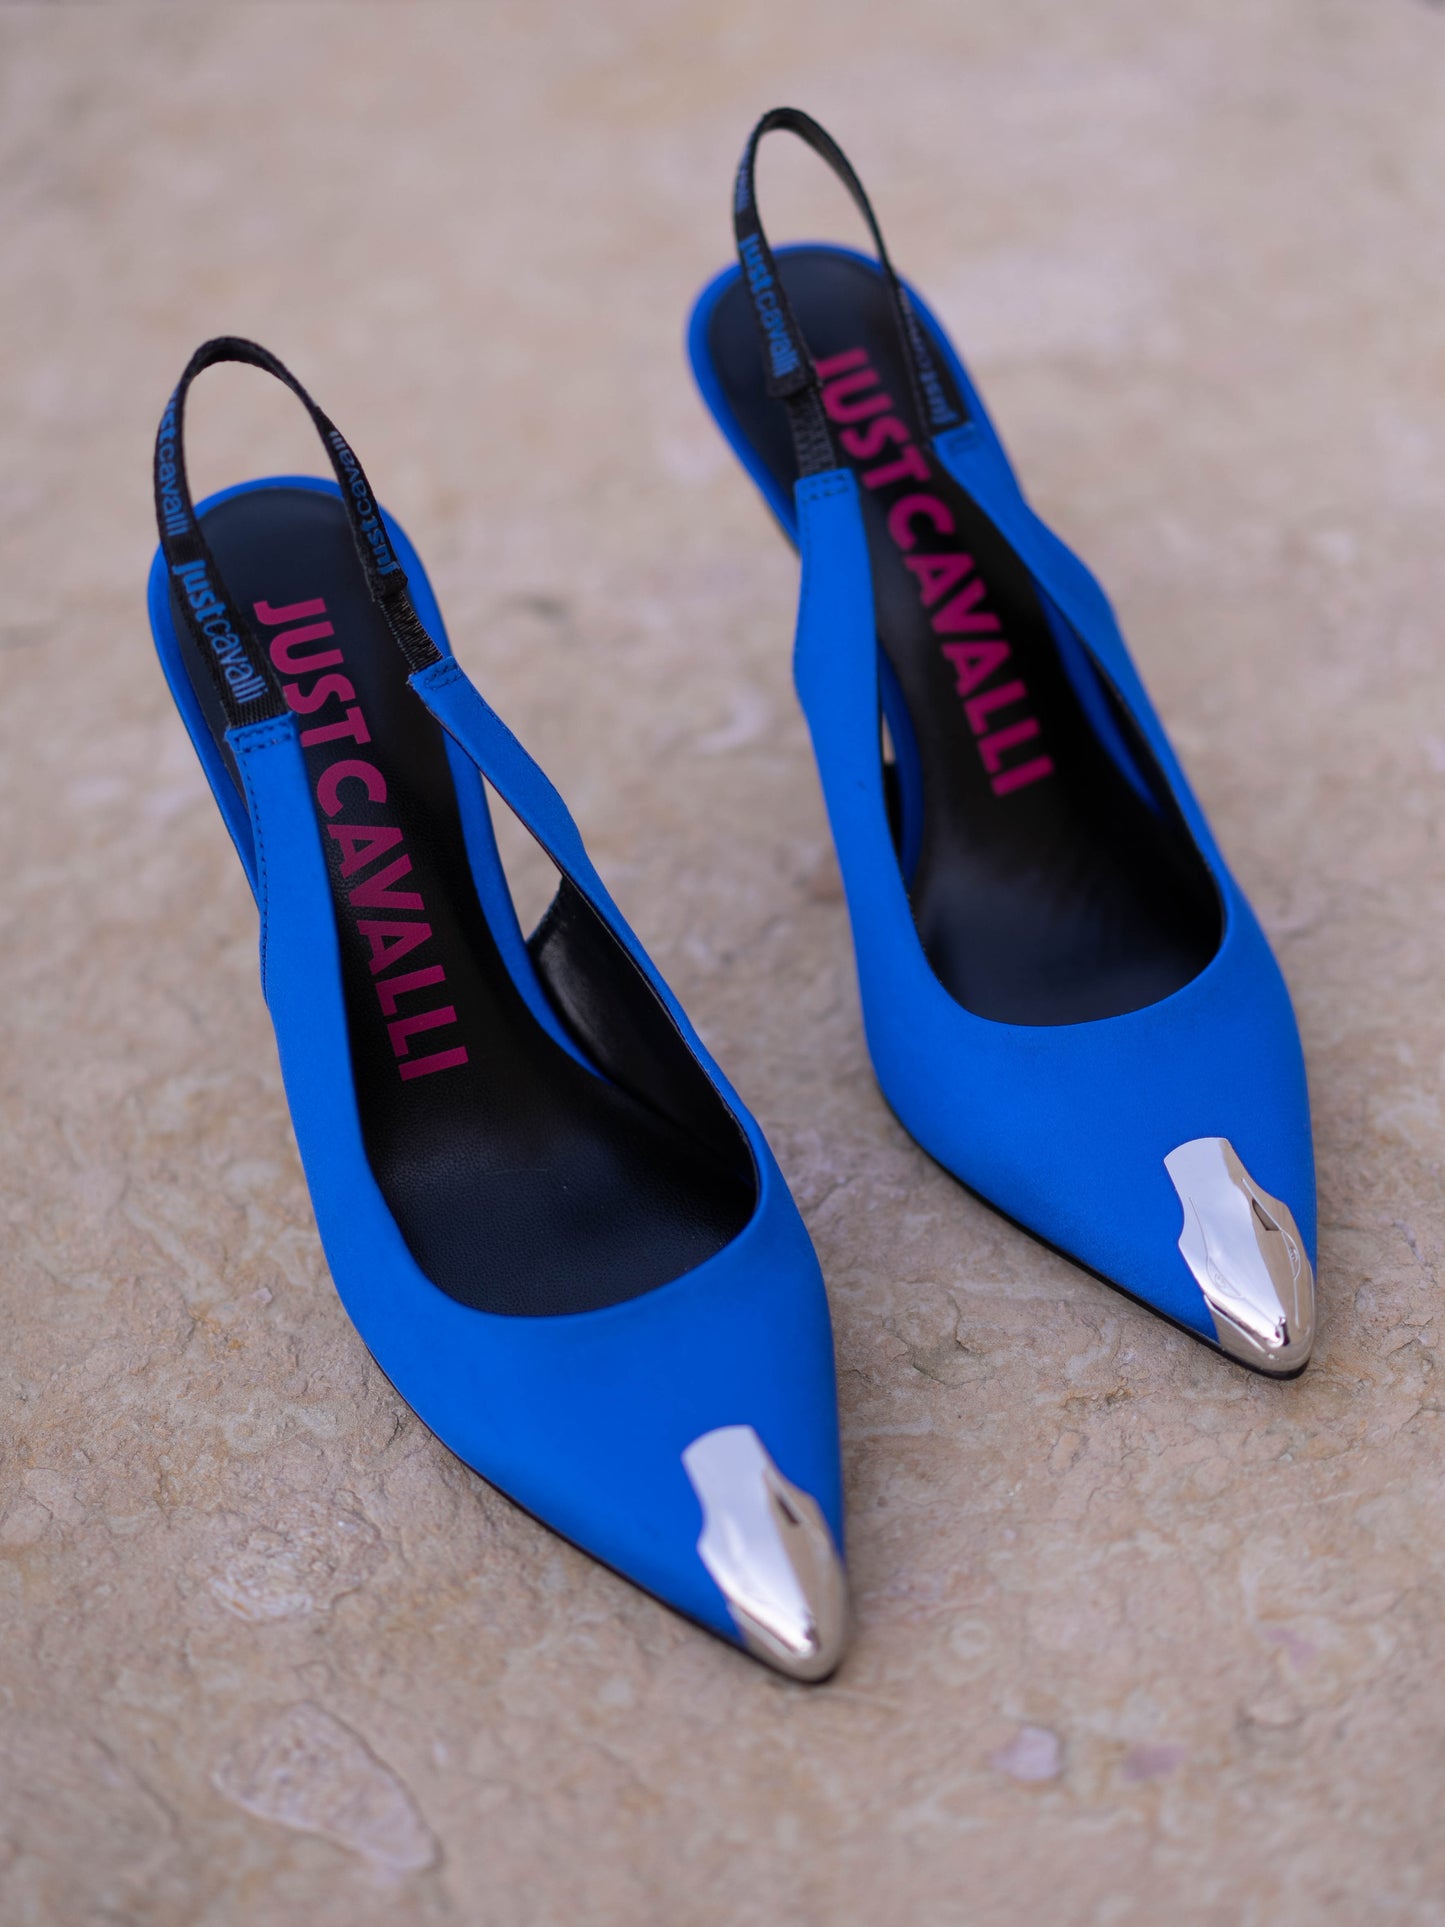 Dazzling blue shoe